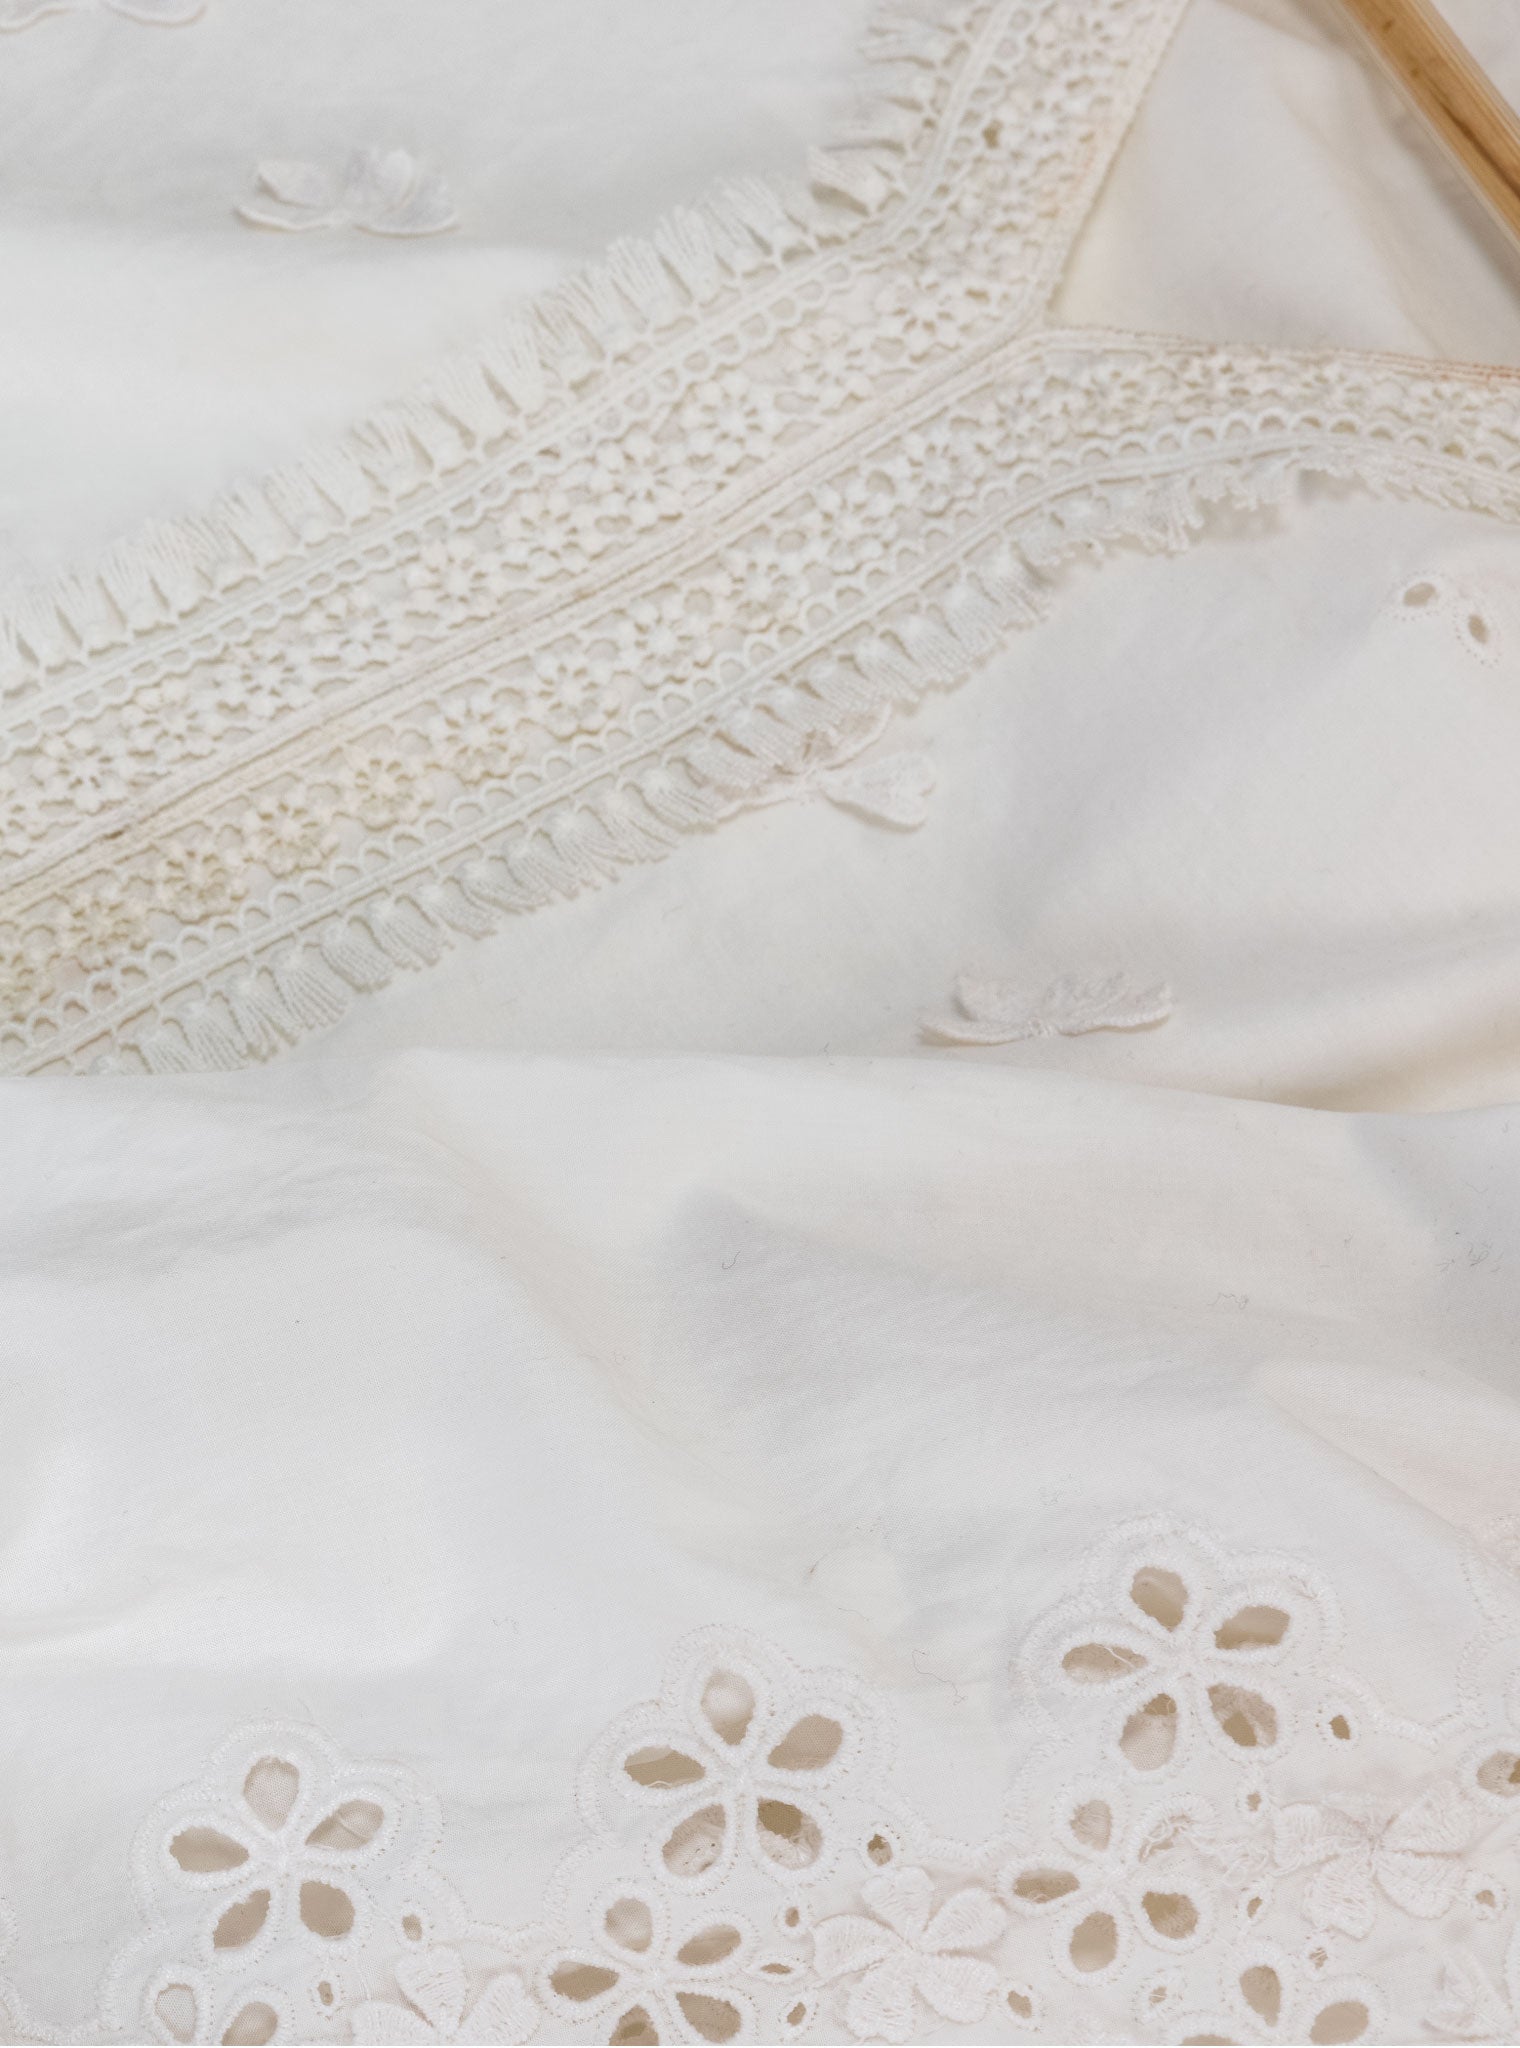 Mulmul Cotton Asota White Kurta With Floral Organza Panelled White Salwar